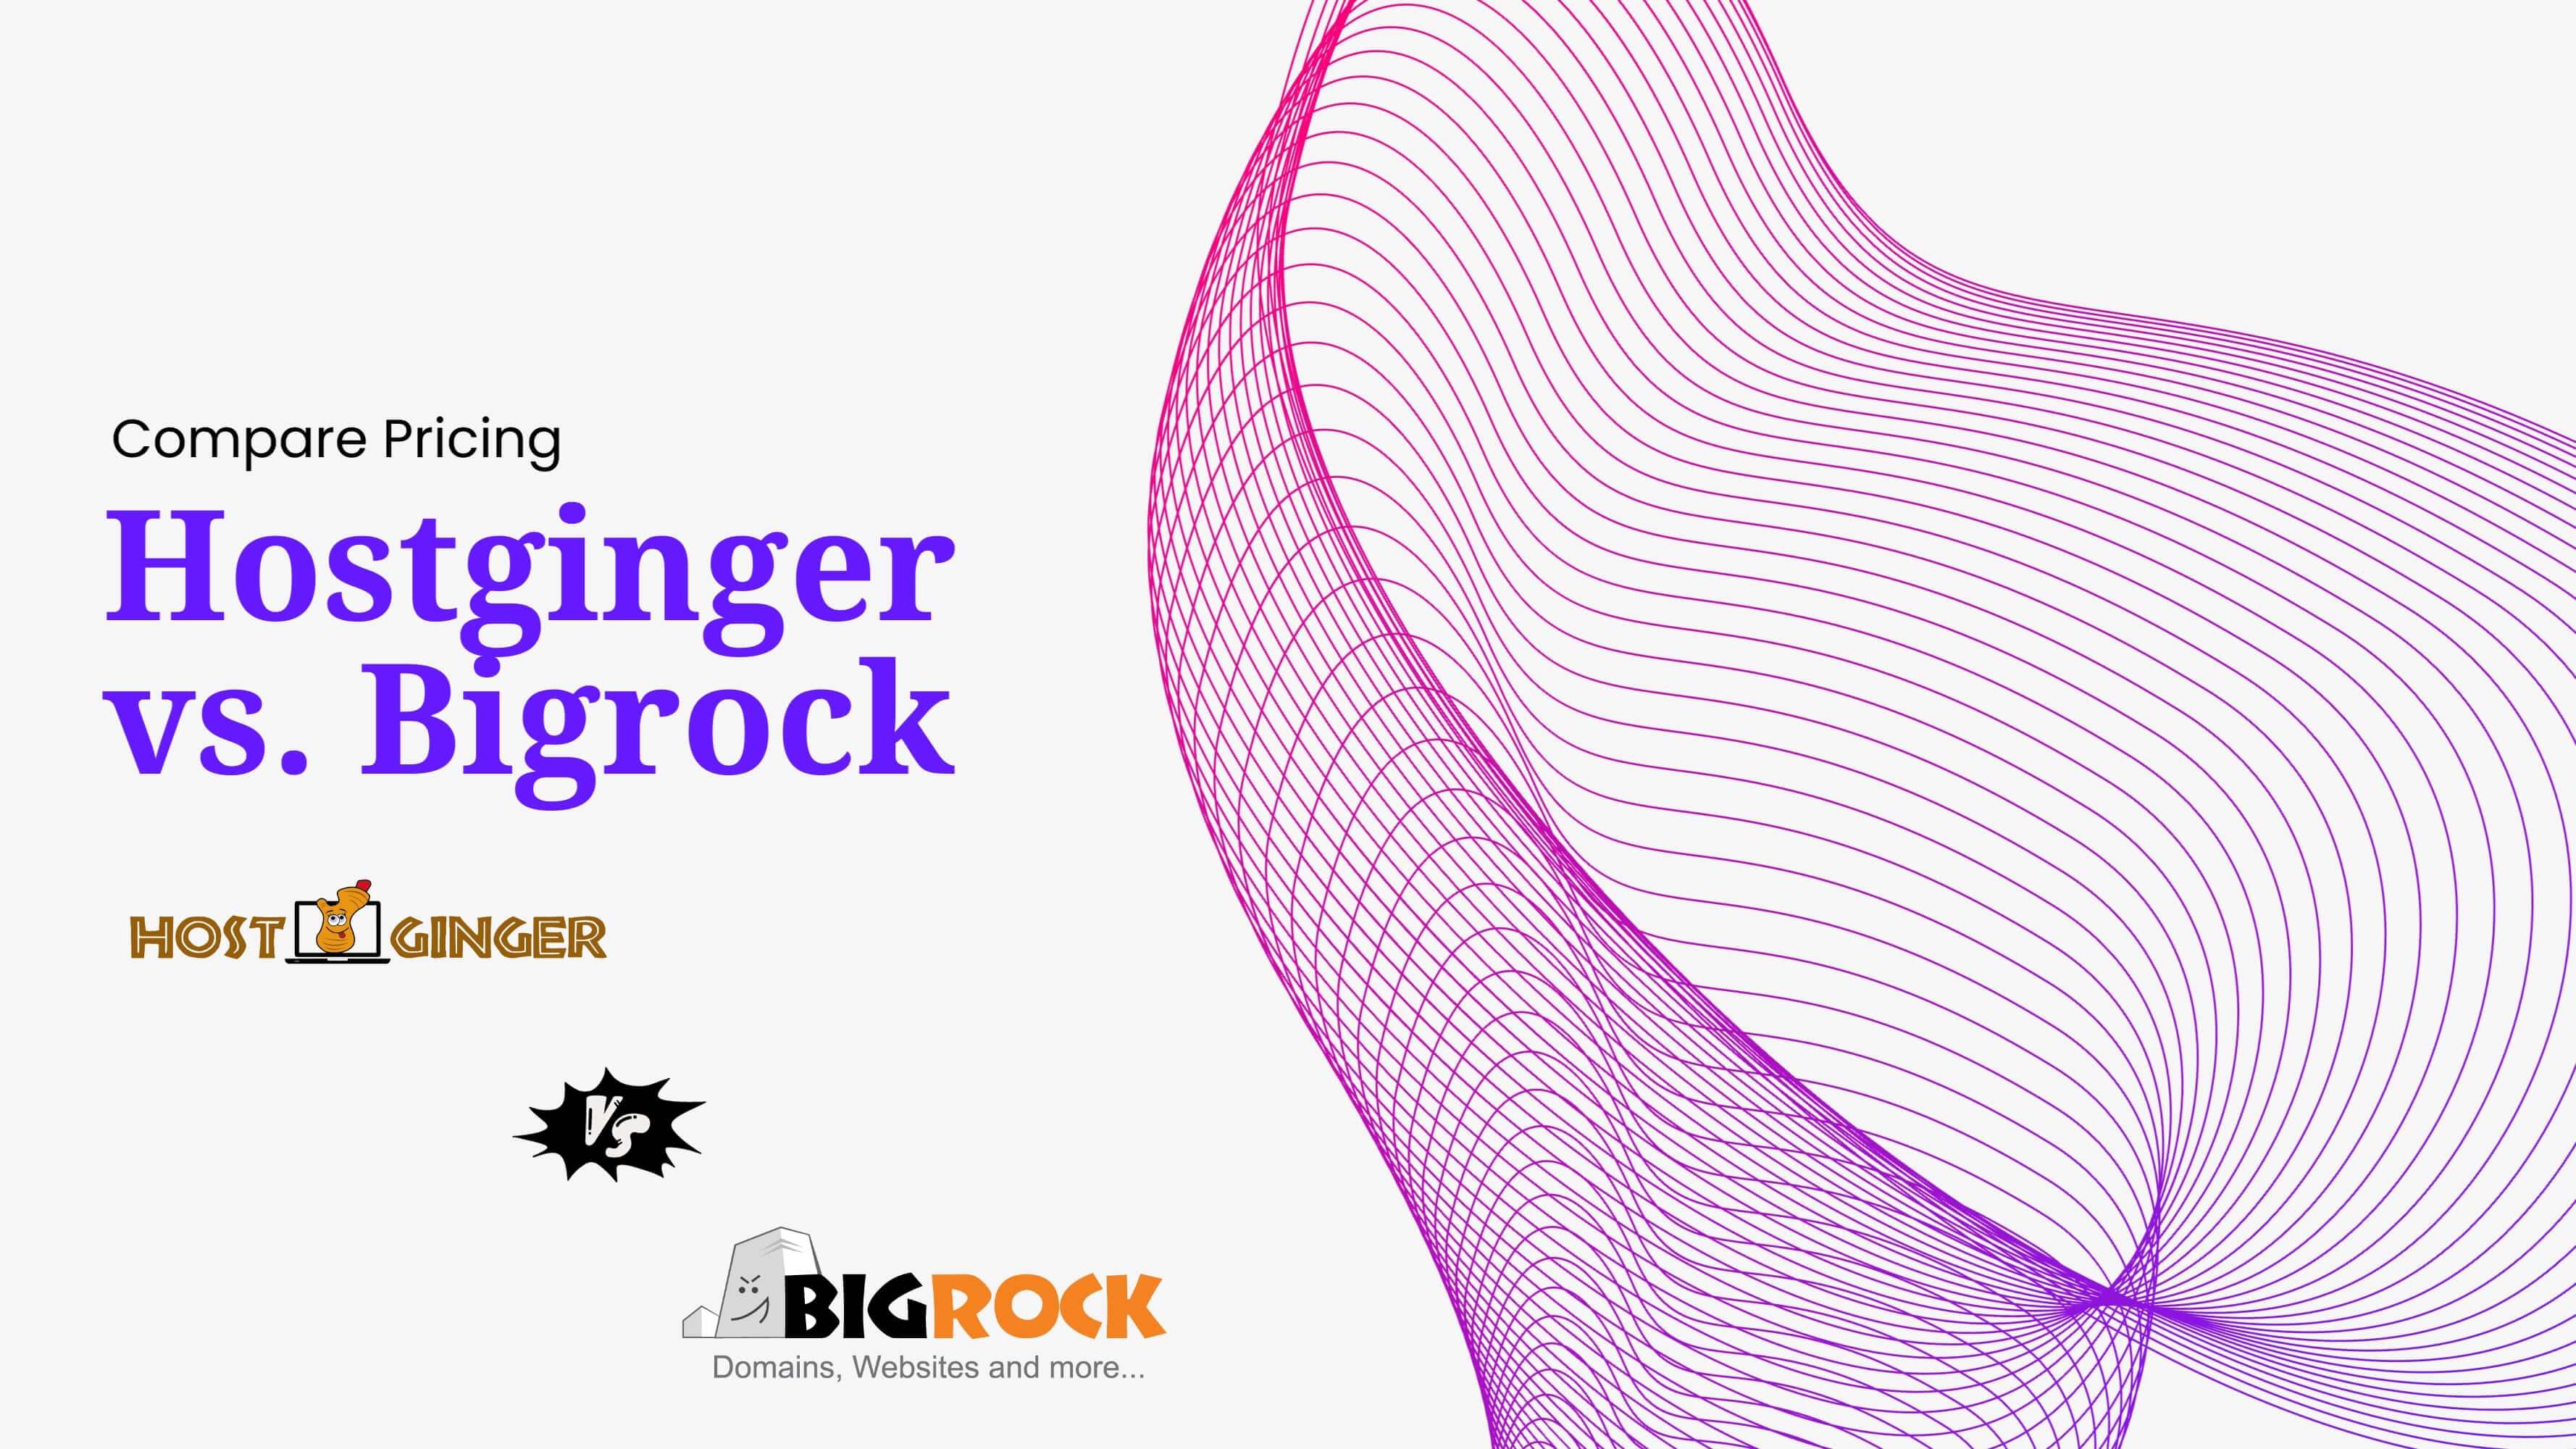 Compare Pricing: Hostginger vs. Bigrock